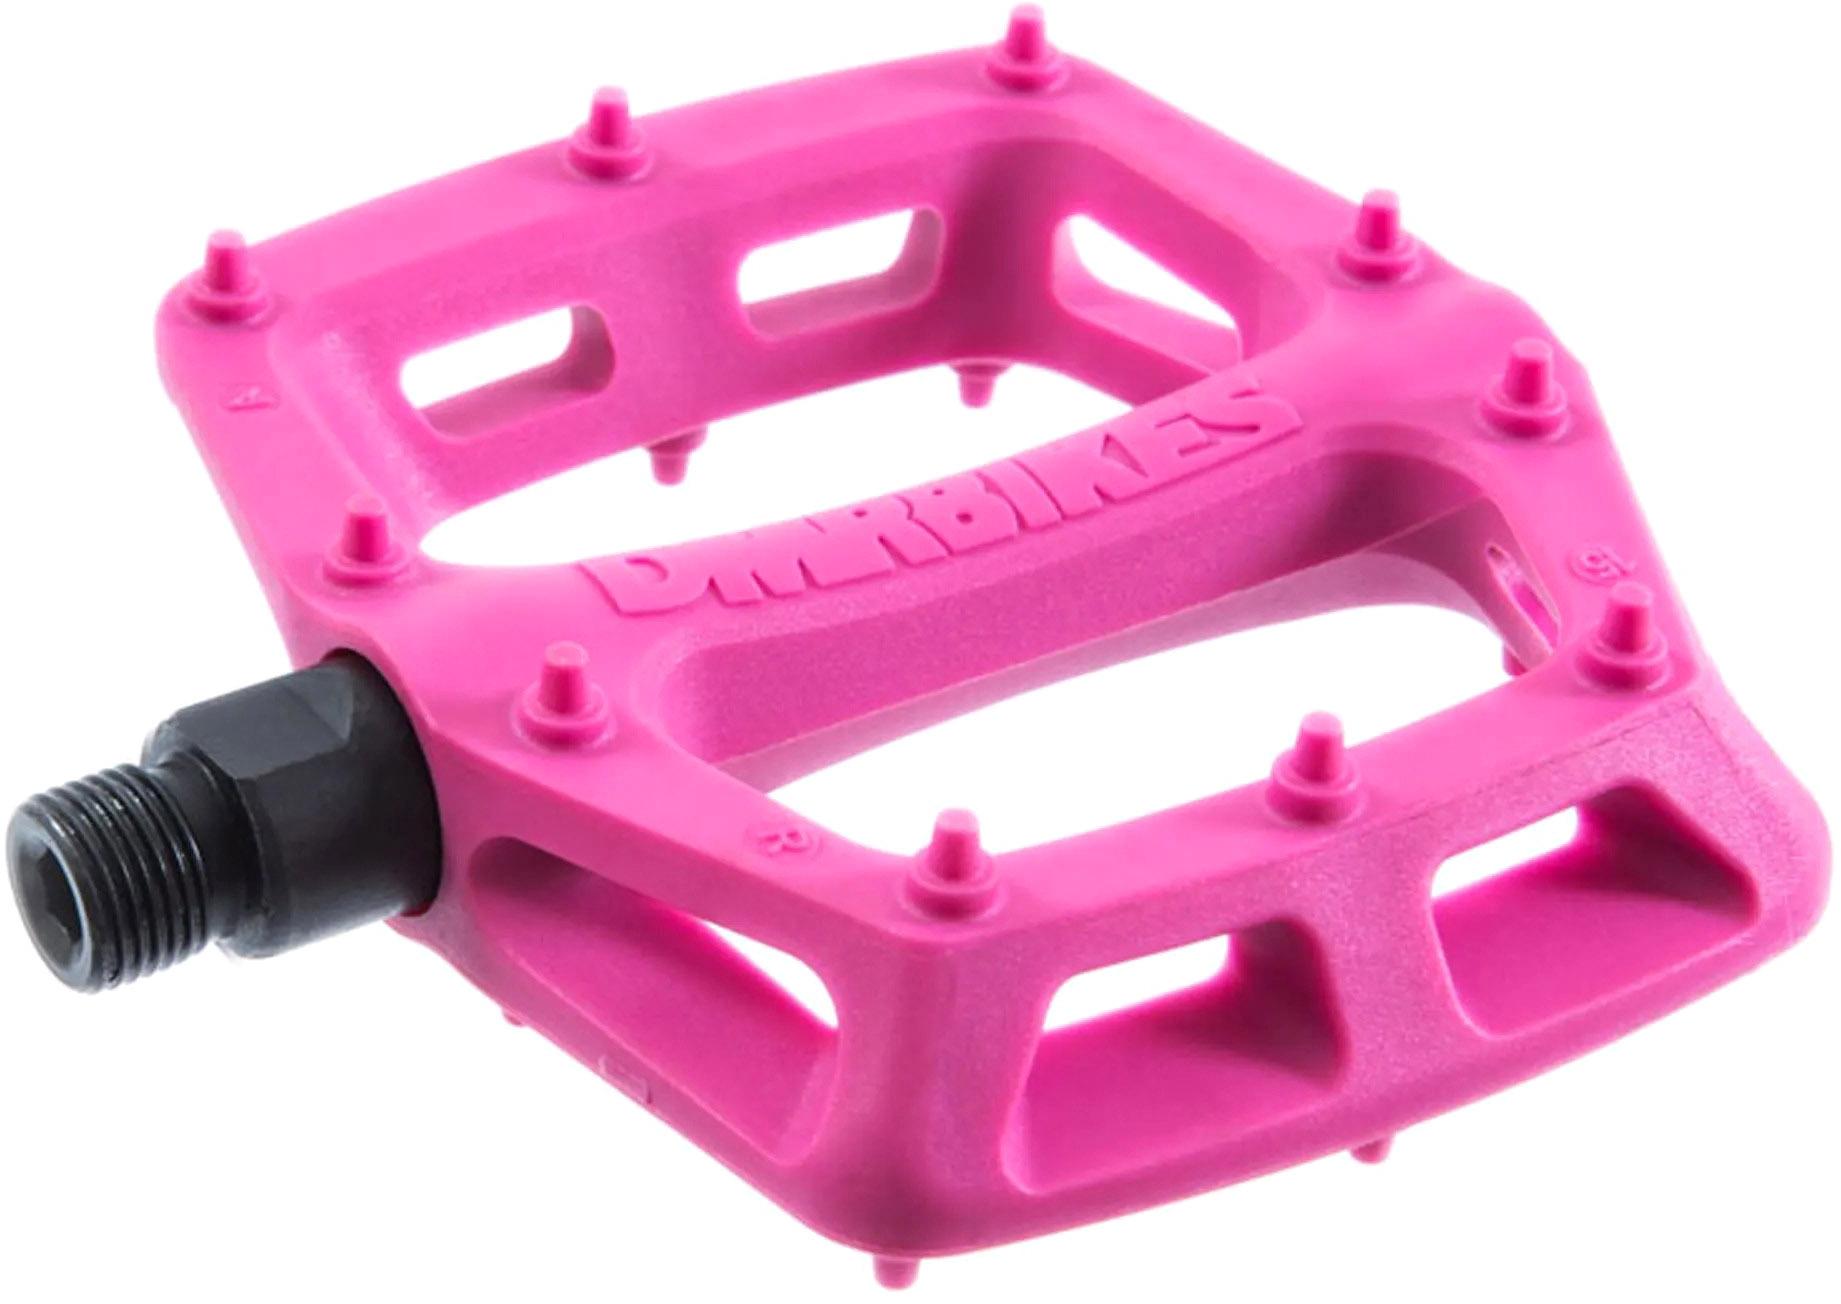 Dmr V6 Plastic Flat Pedals - Pink